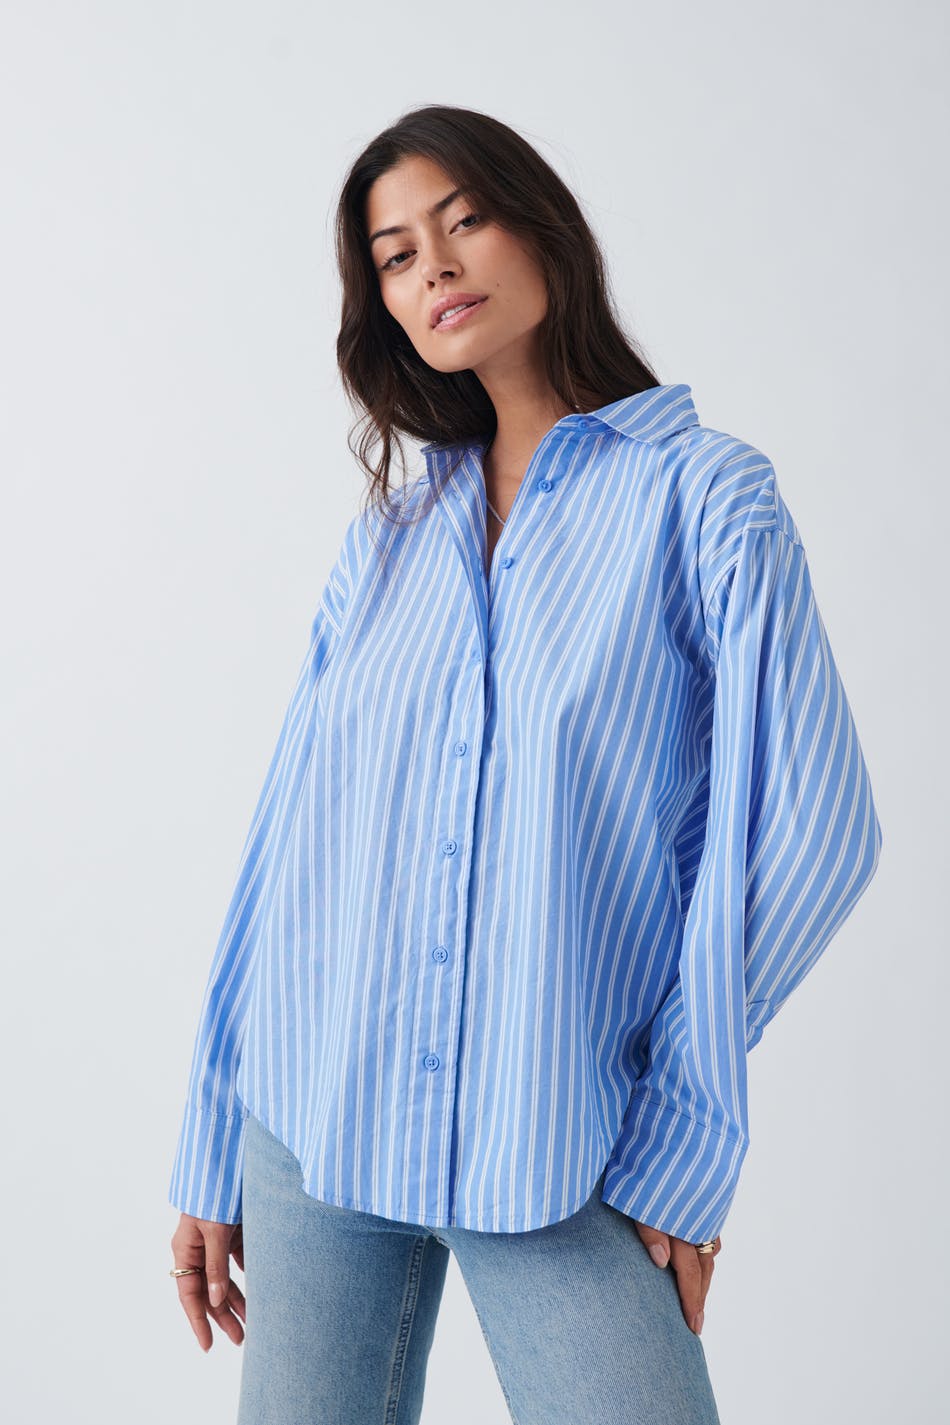 Gina Tricot - Poplin shirt - skjortor - Blue - L - Female